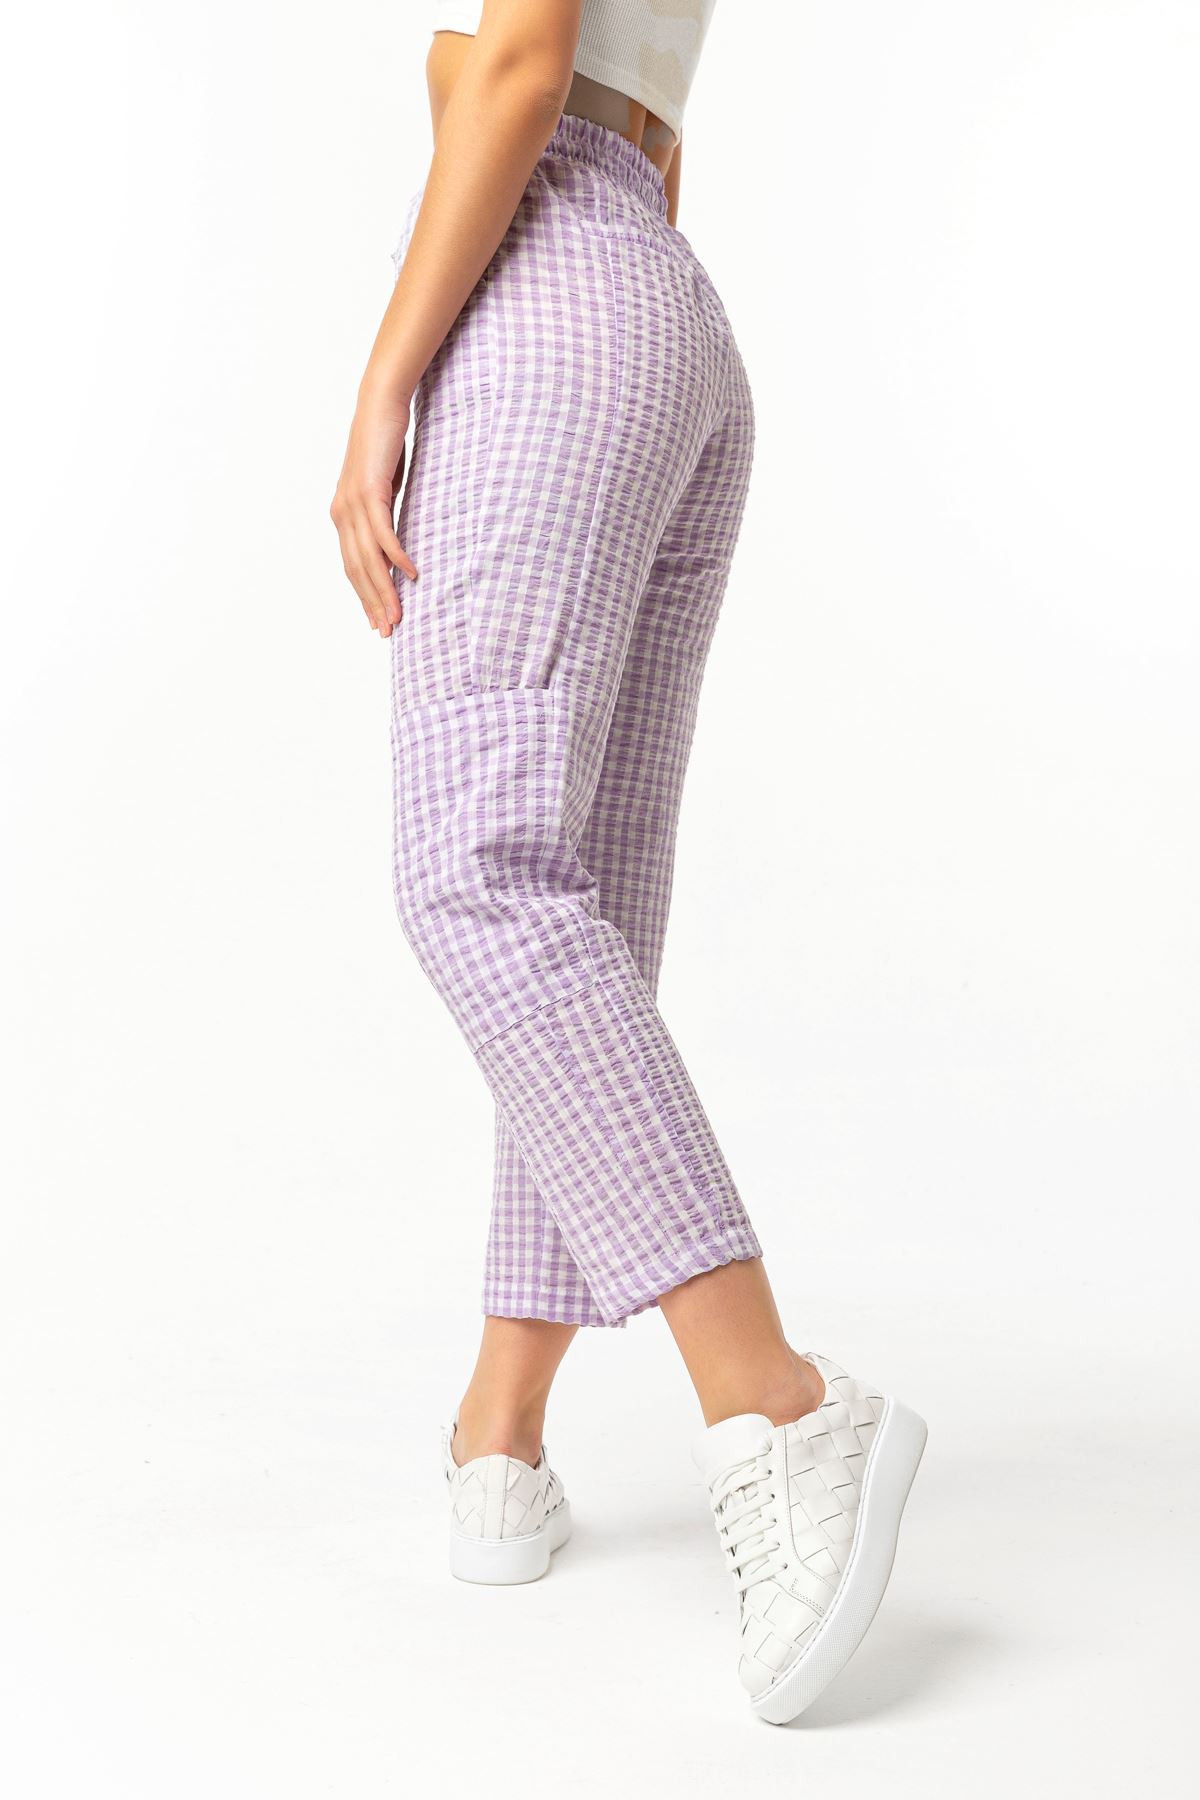 Gofre Fabric Ankle Length Square Pique Women'S Trouser - Lilac